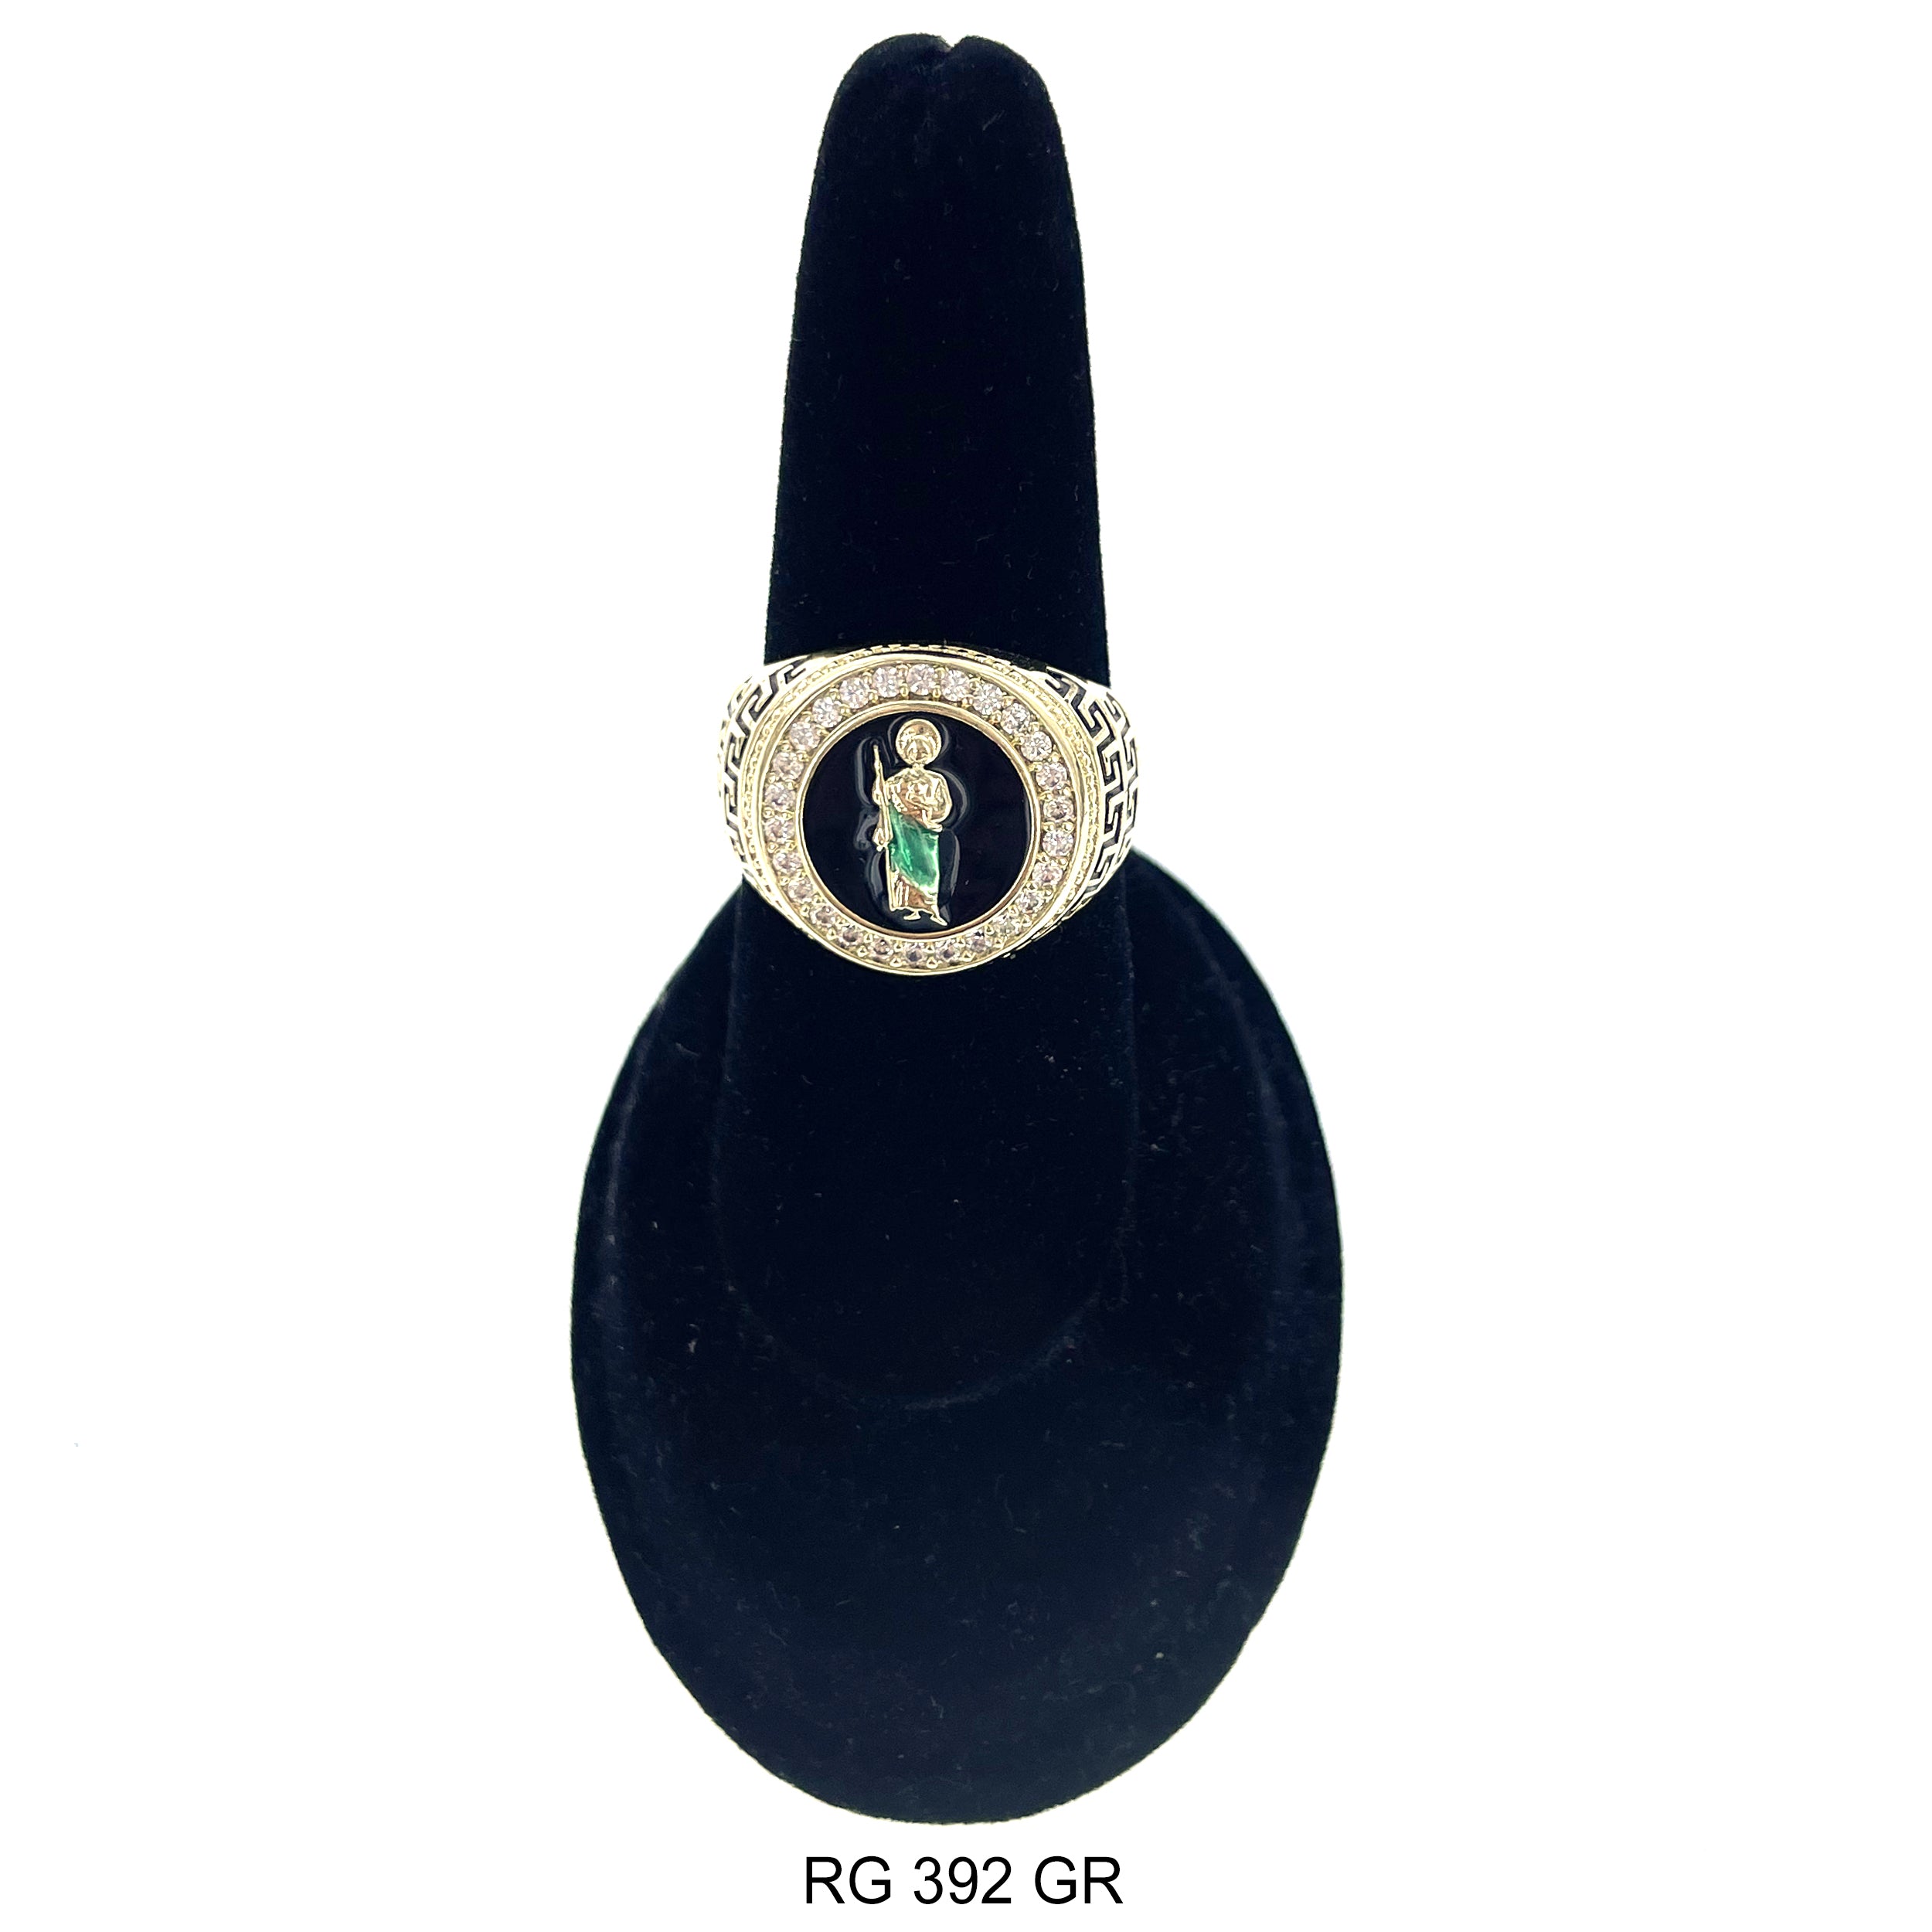 San Judas Openable Ring RG 392 GR